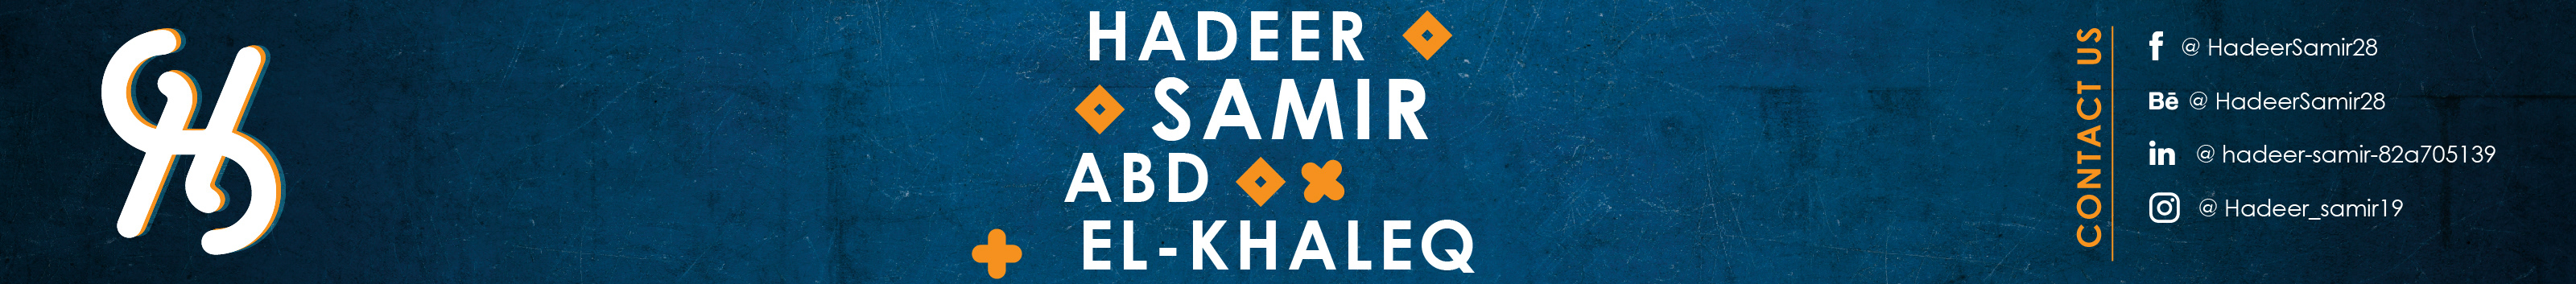 Bannière de profil de Hadeer Samir